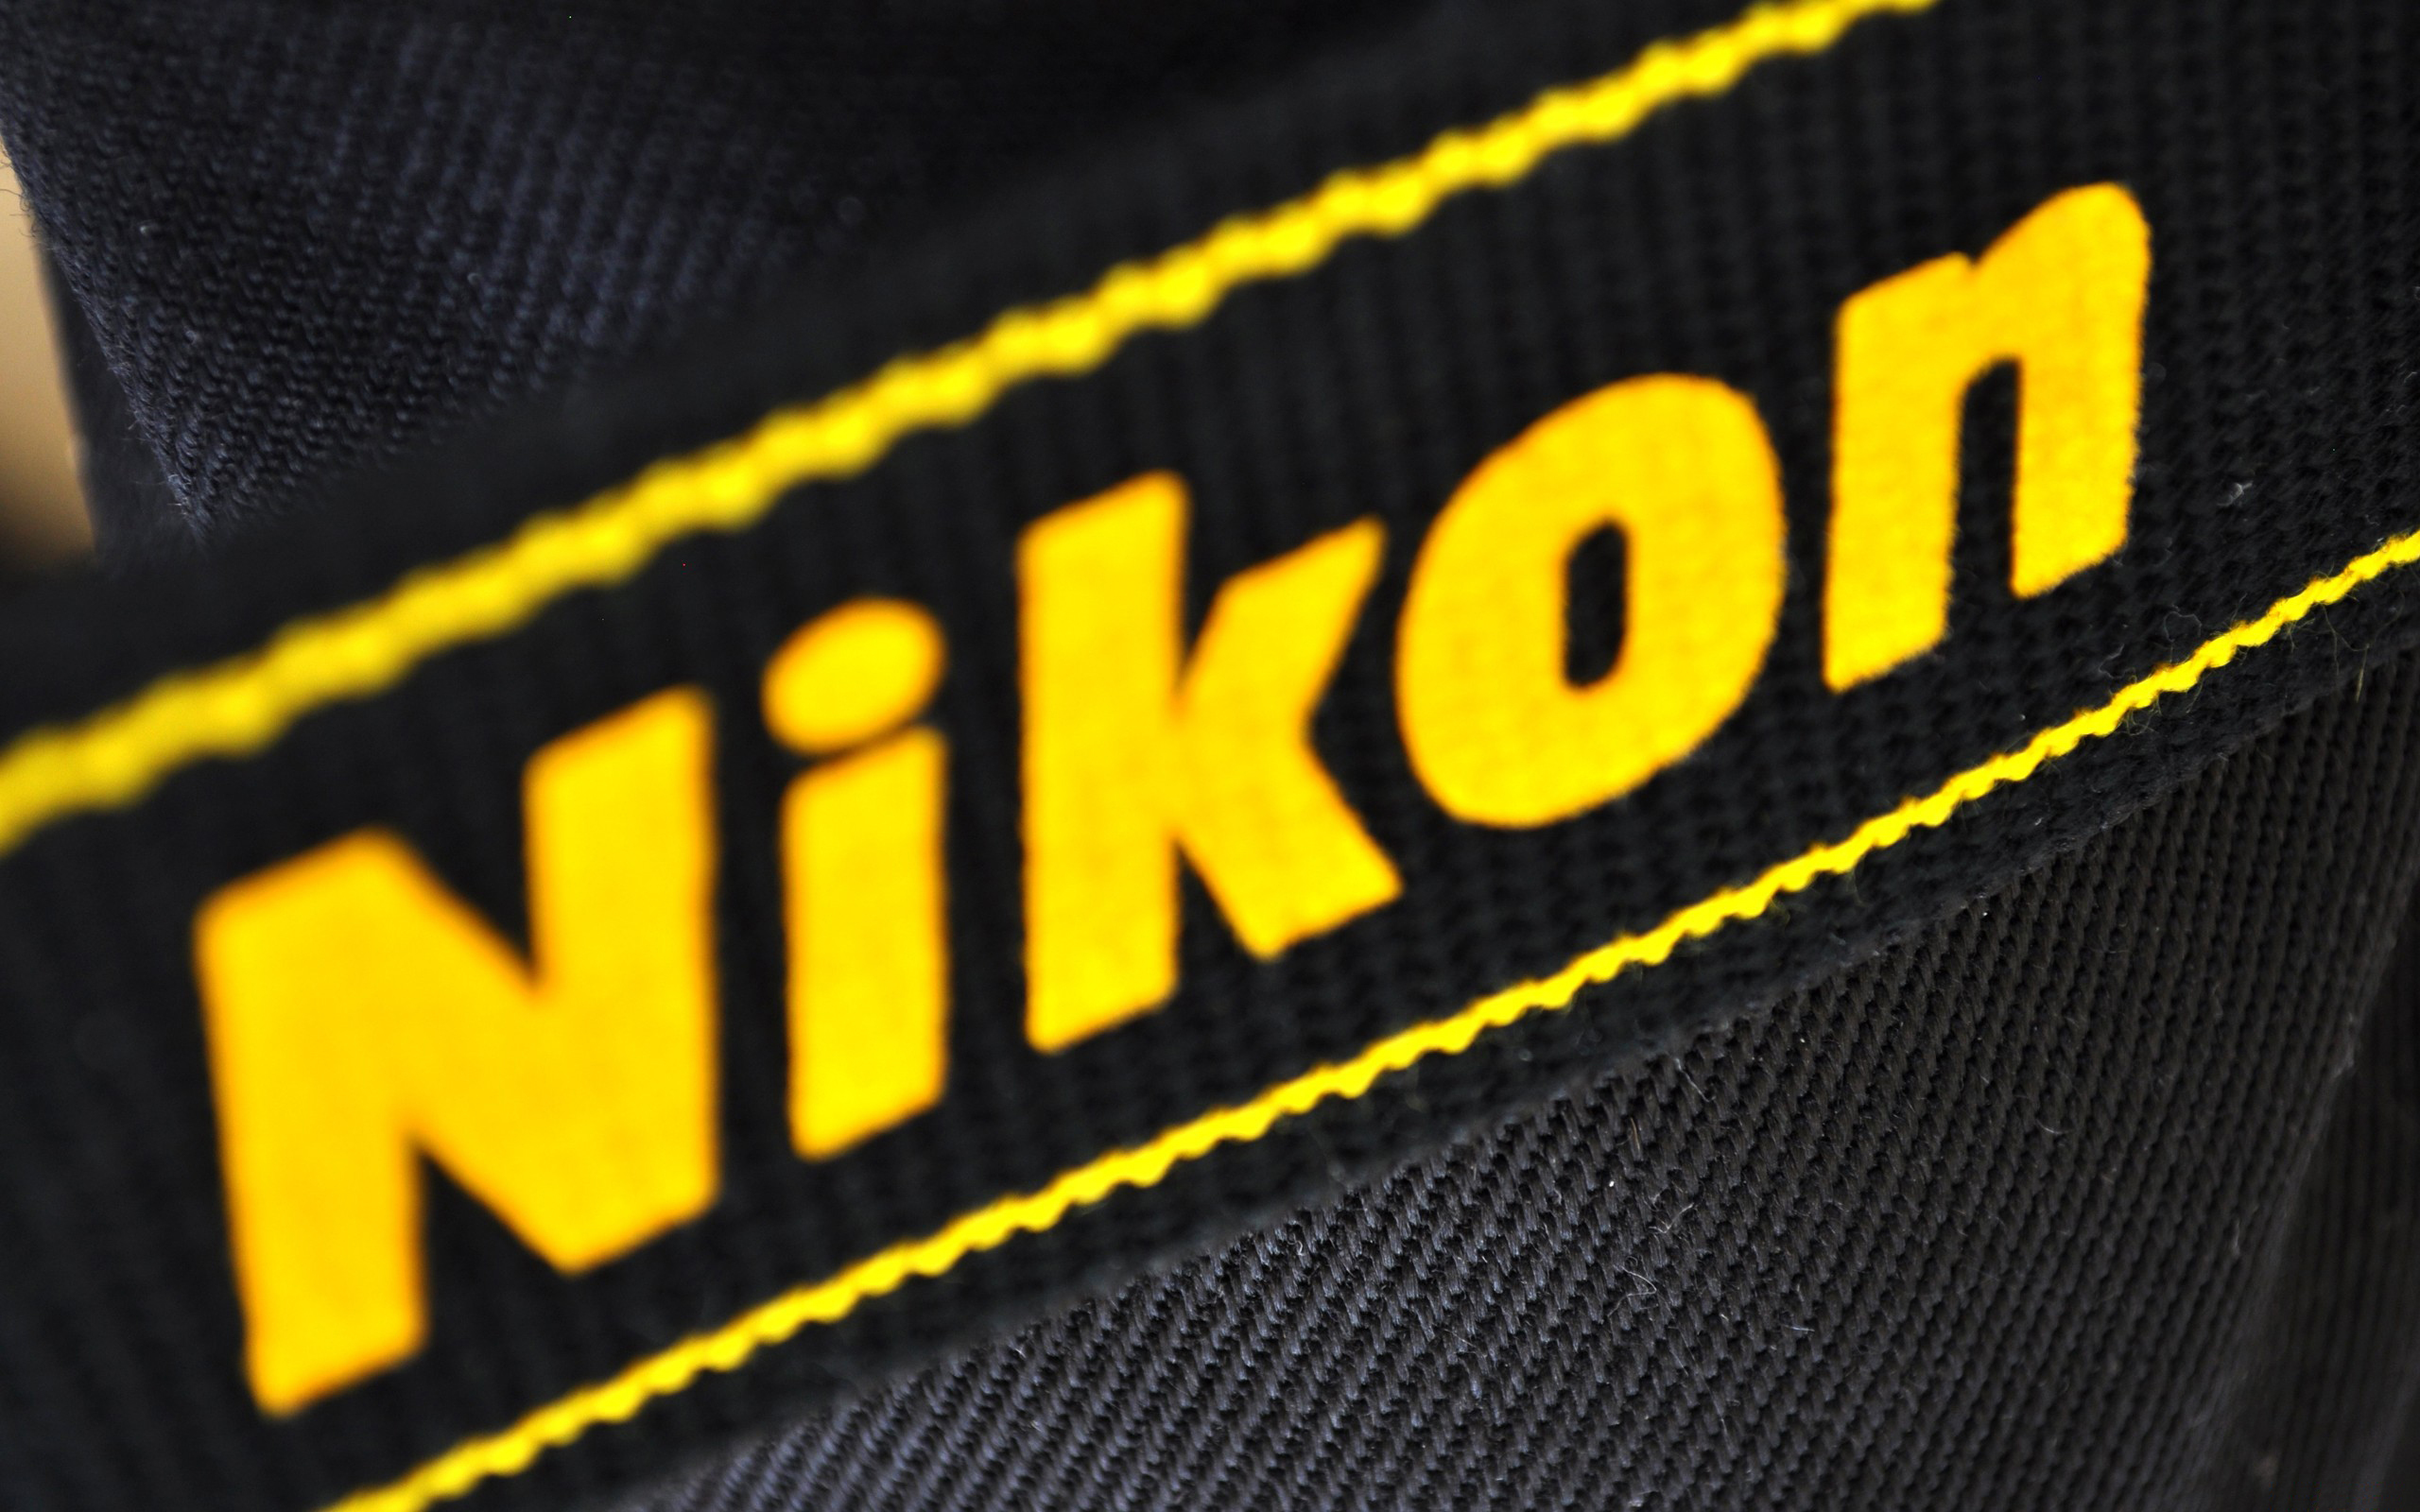 The Nikon Corporation